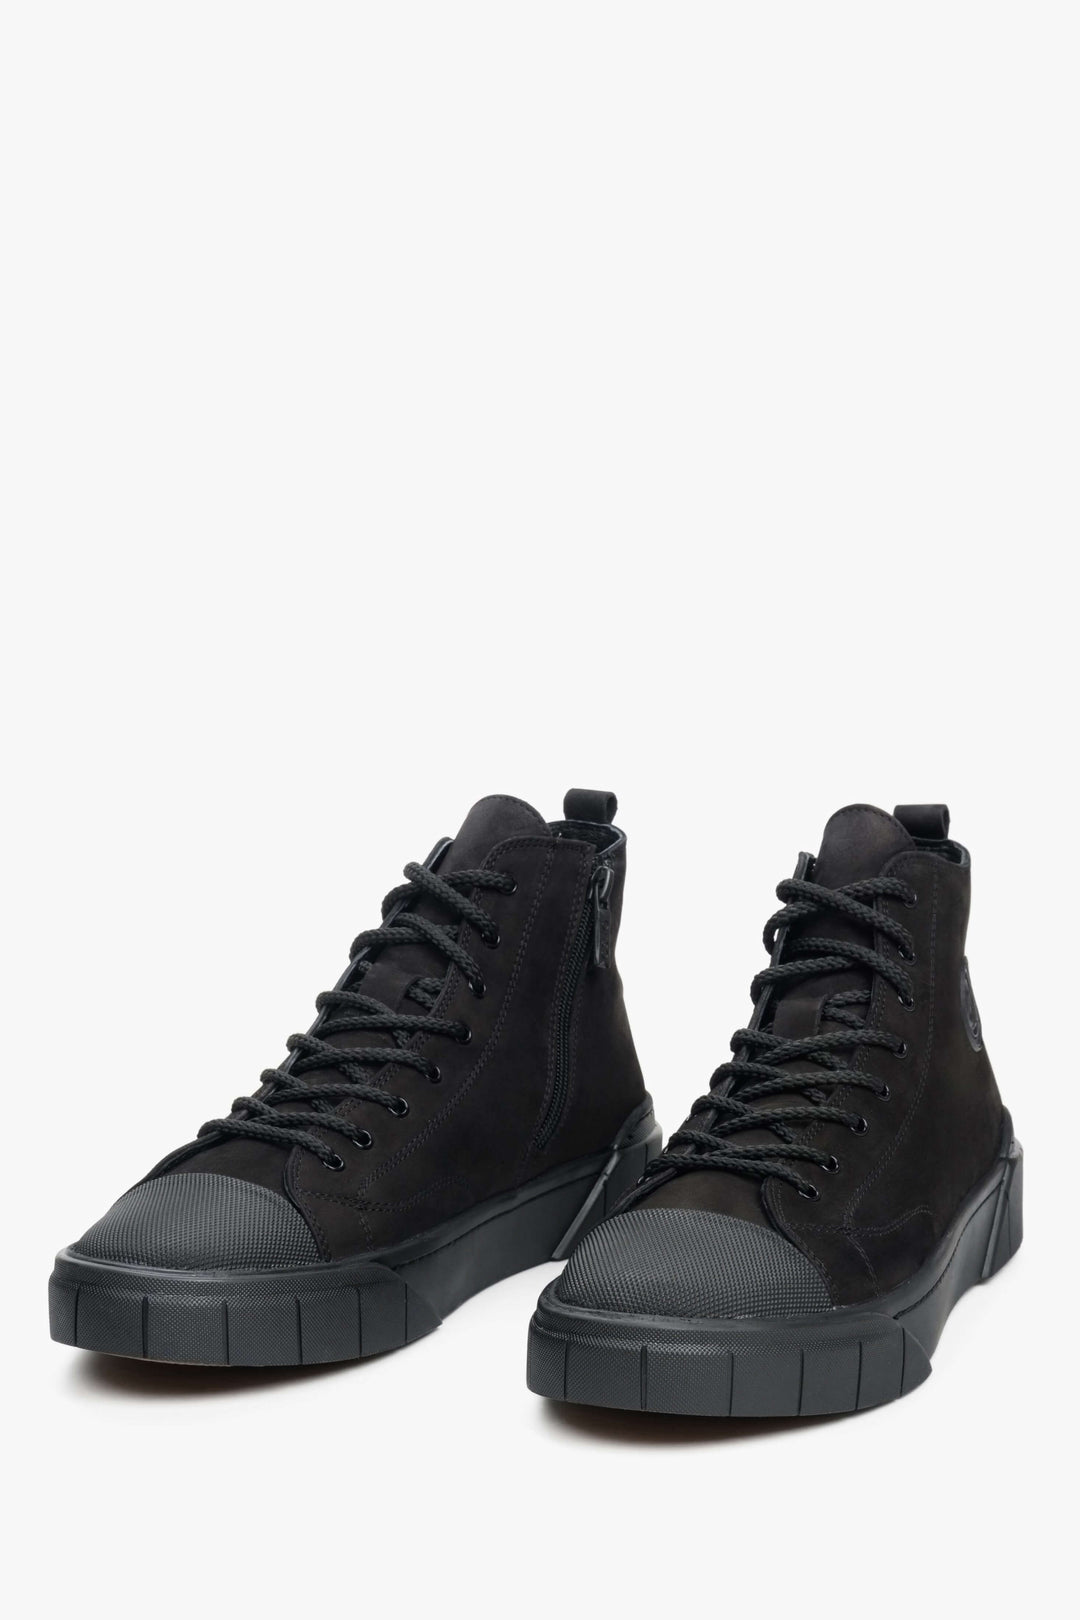 Estro brand men's lace-up winter sneakers in black - presentation of shoe toe.